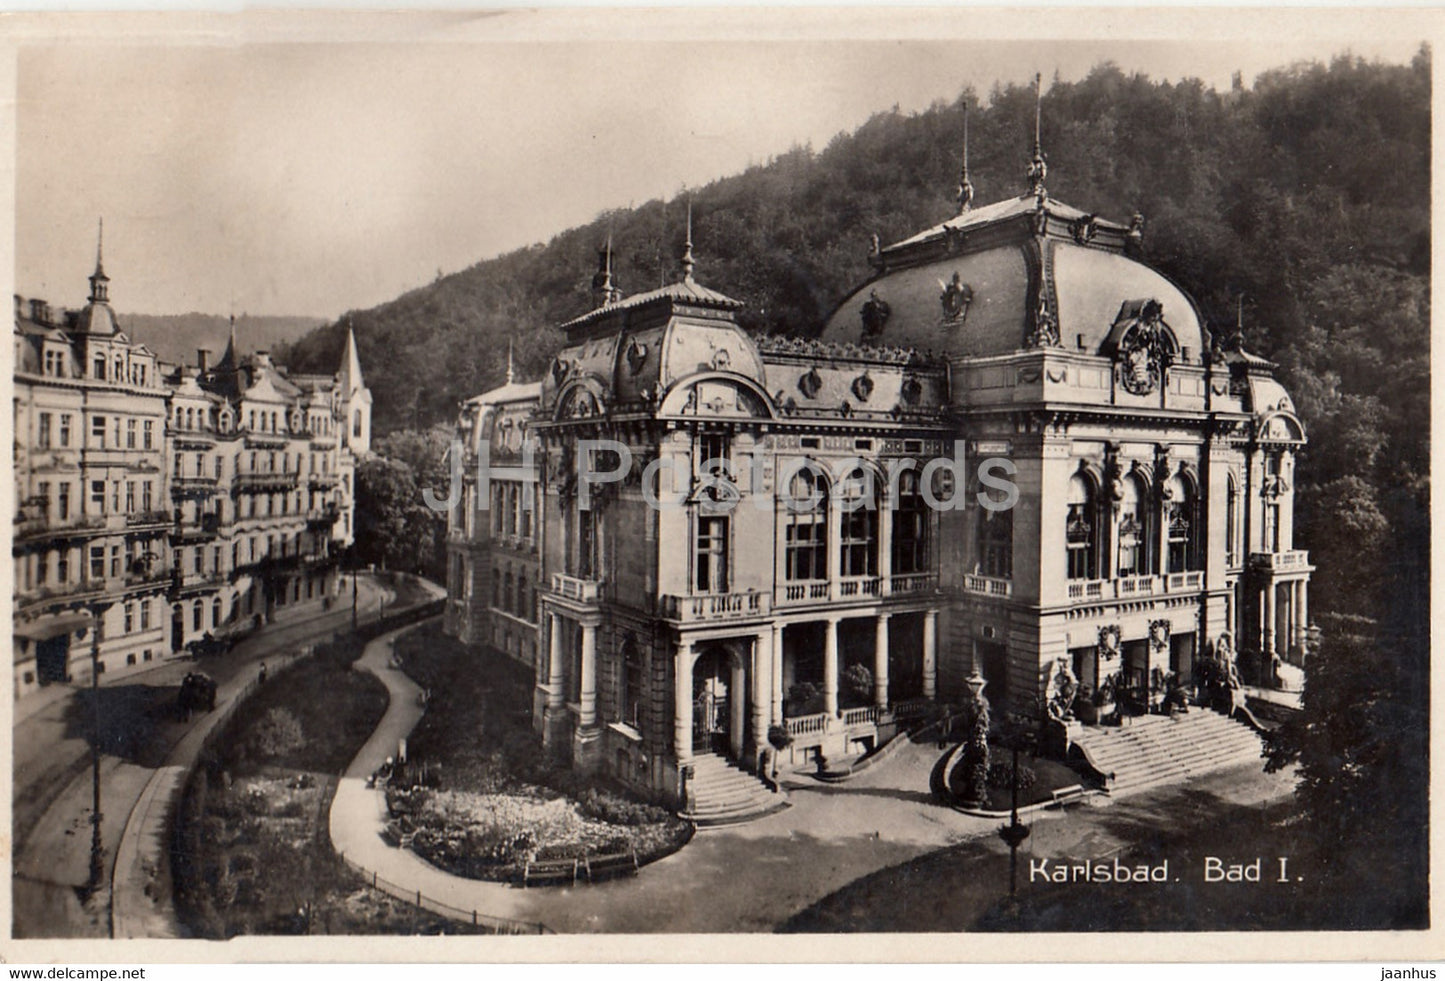 Karlovy Vary - Karlsbad - Bad I - old postcard - 1930 - Czechoslovakia - Czech Republic - used - JH Postcards